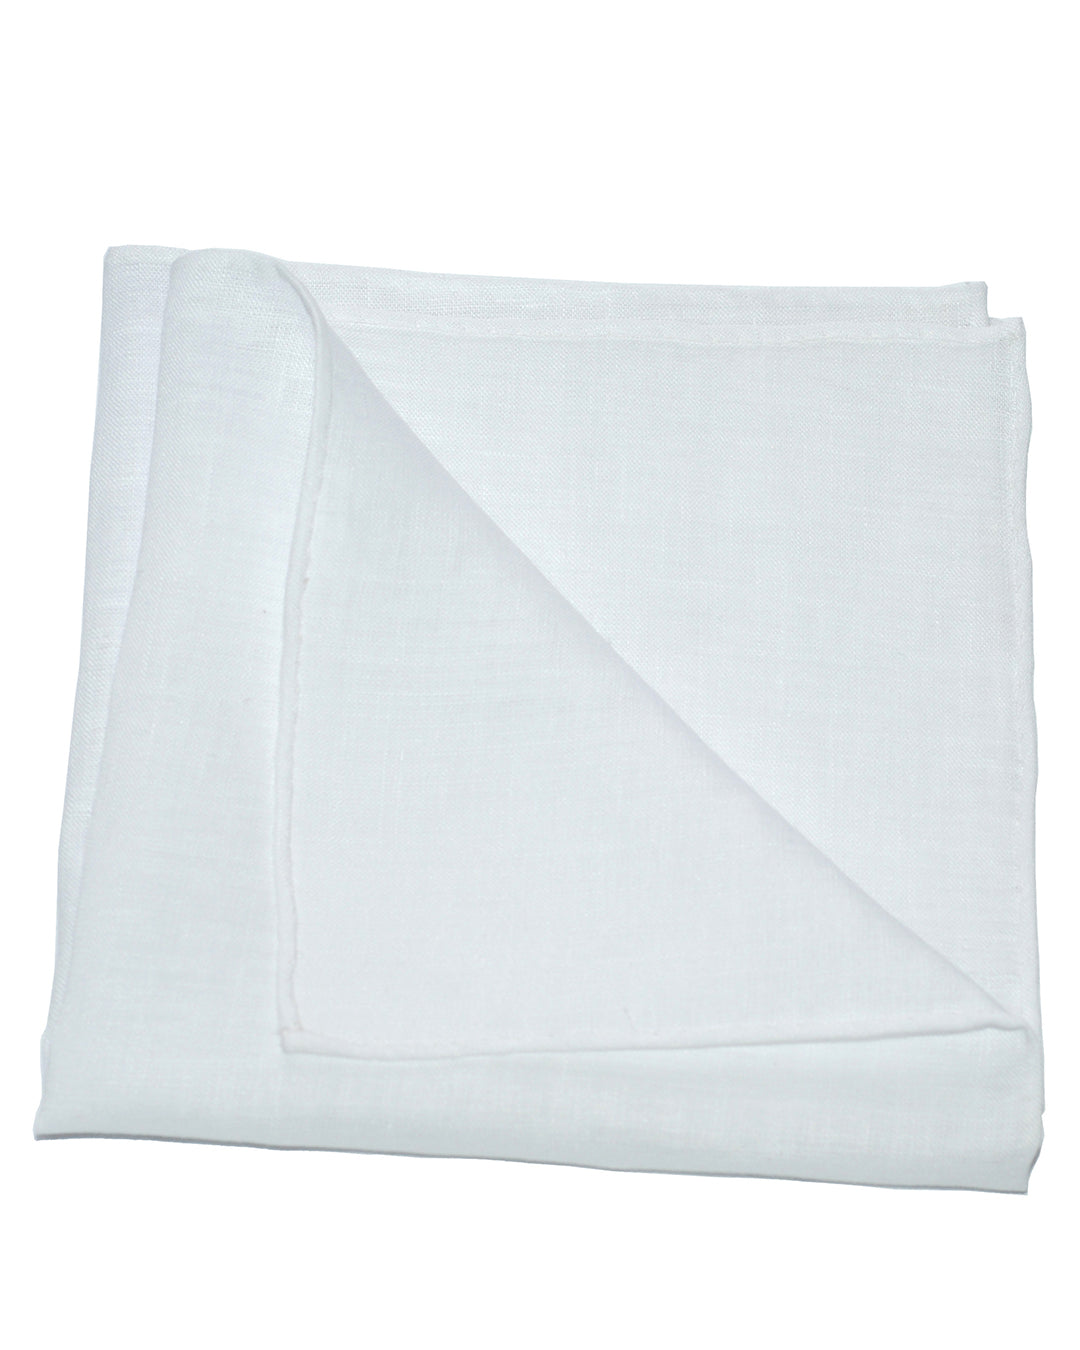 Pocket Square - Fine White Linen